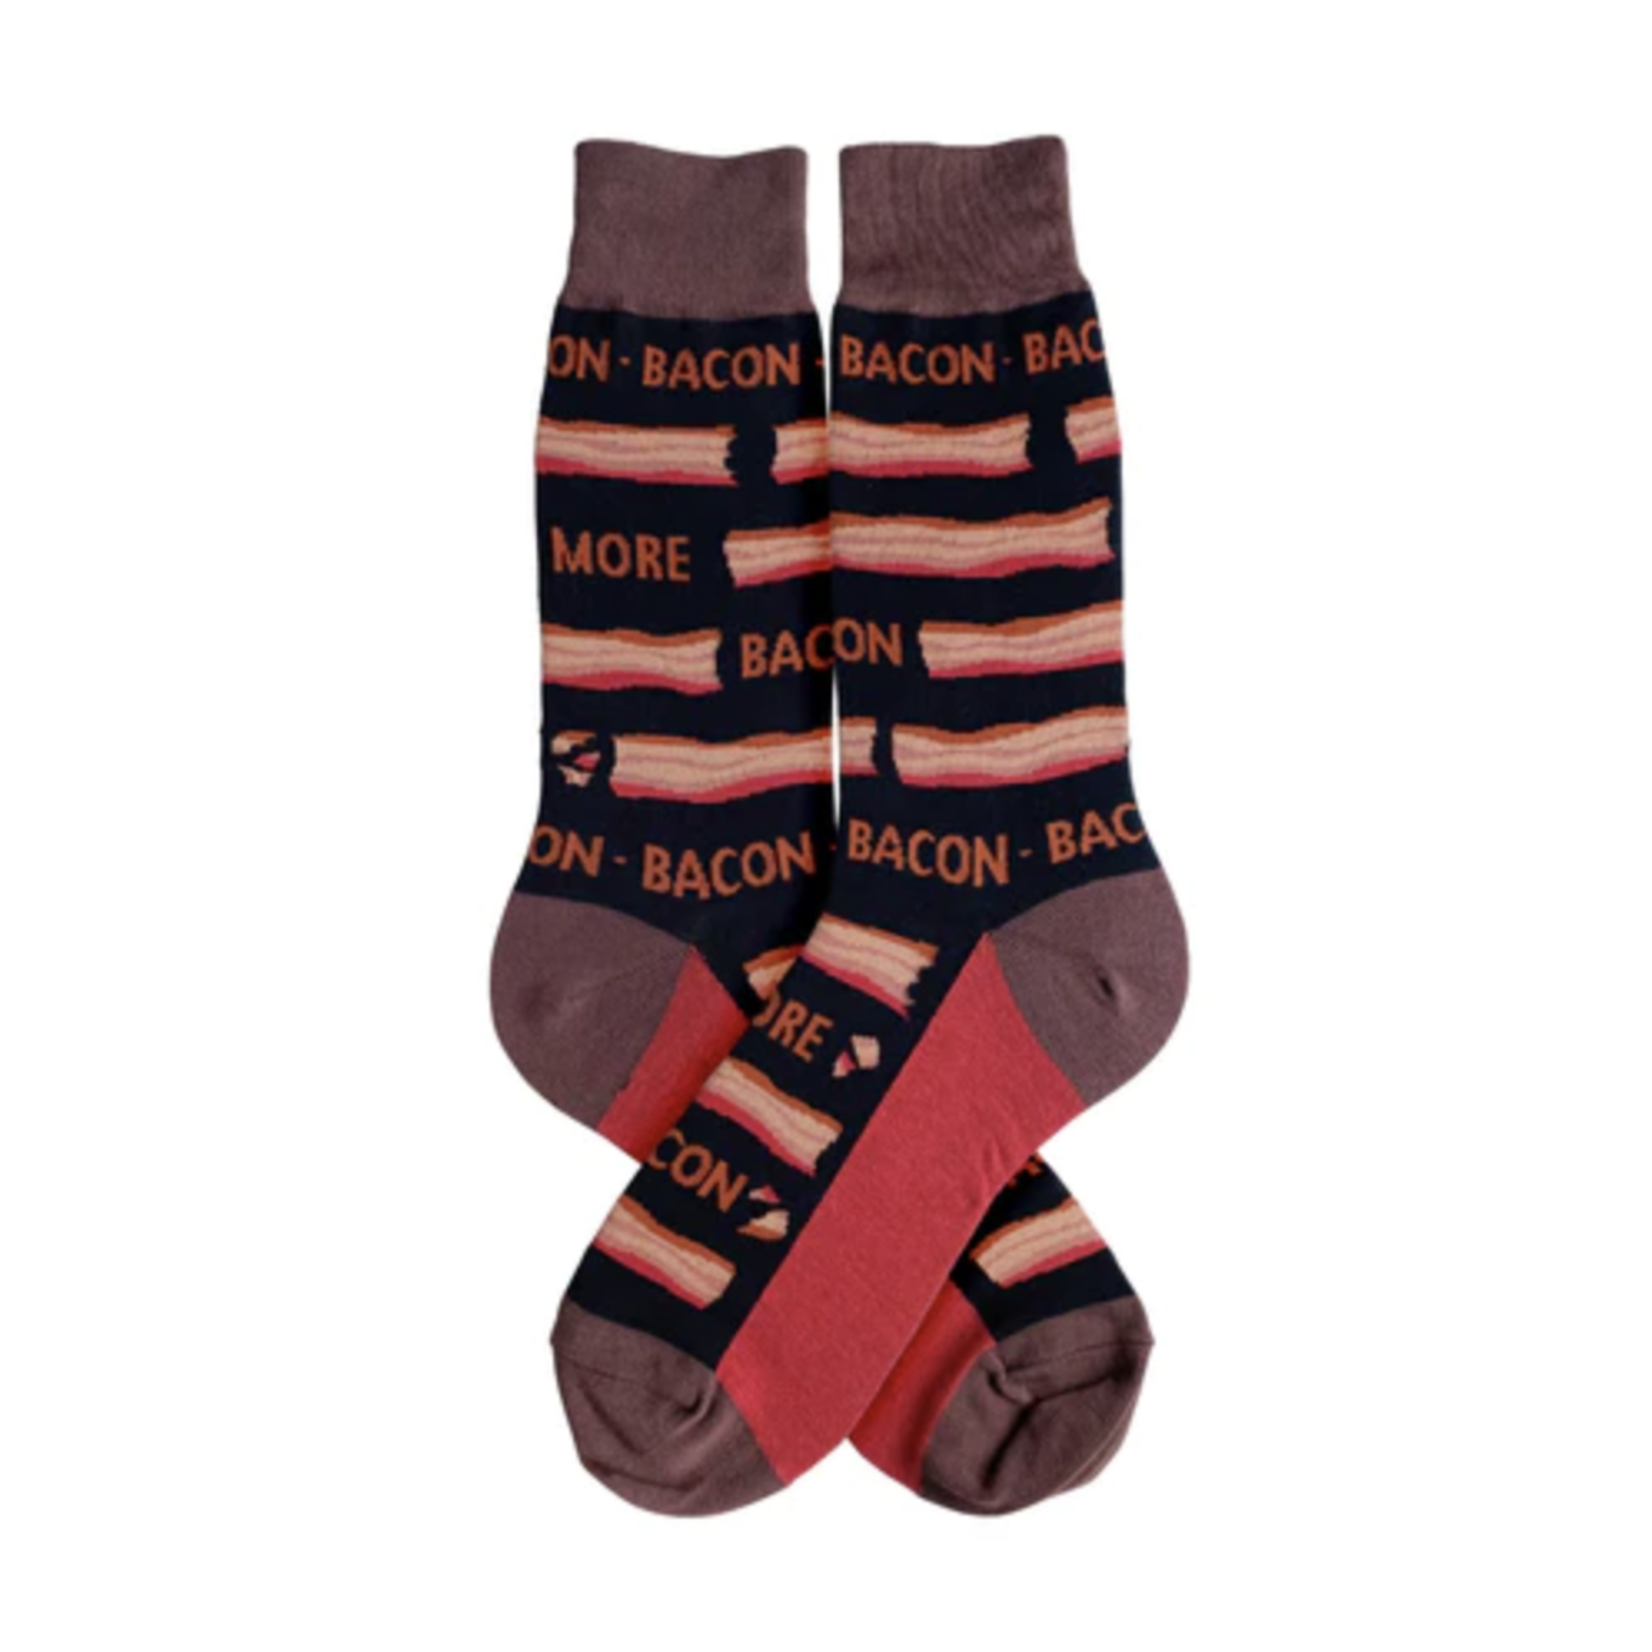 Socks (Mens) - More Bacon